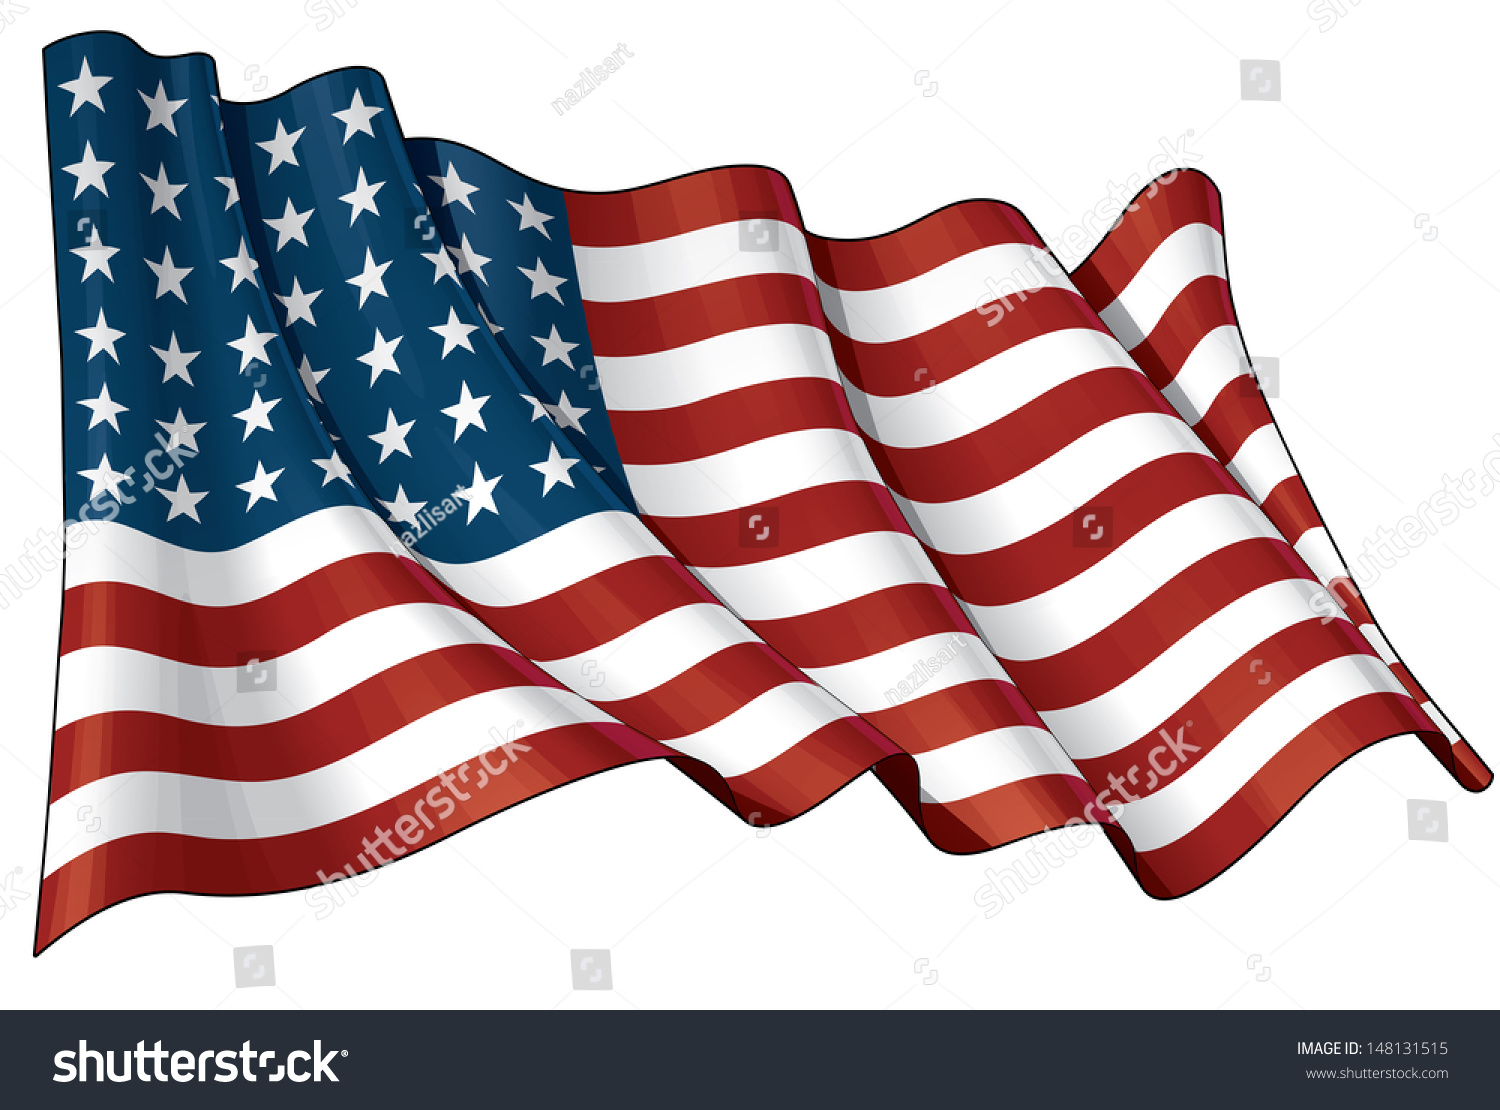 Download Illustration Waving Us 48 Star Flag Stock Vector 148131515 ...